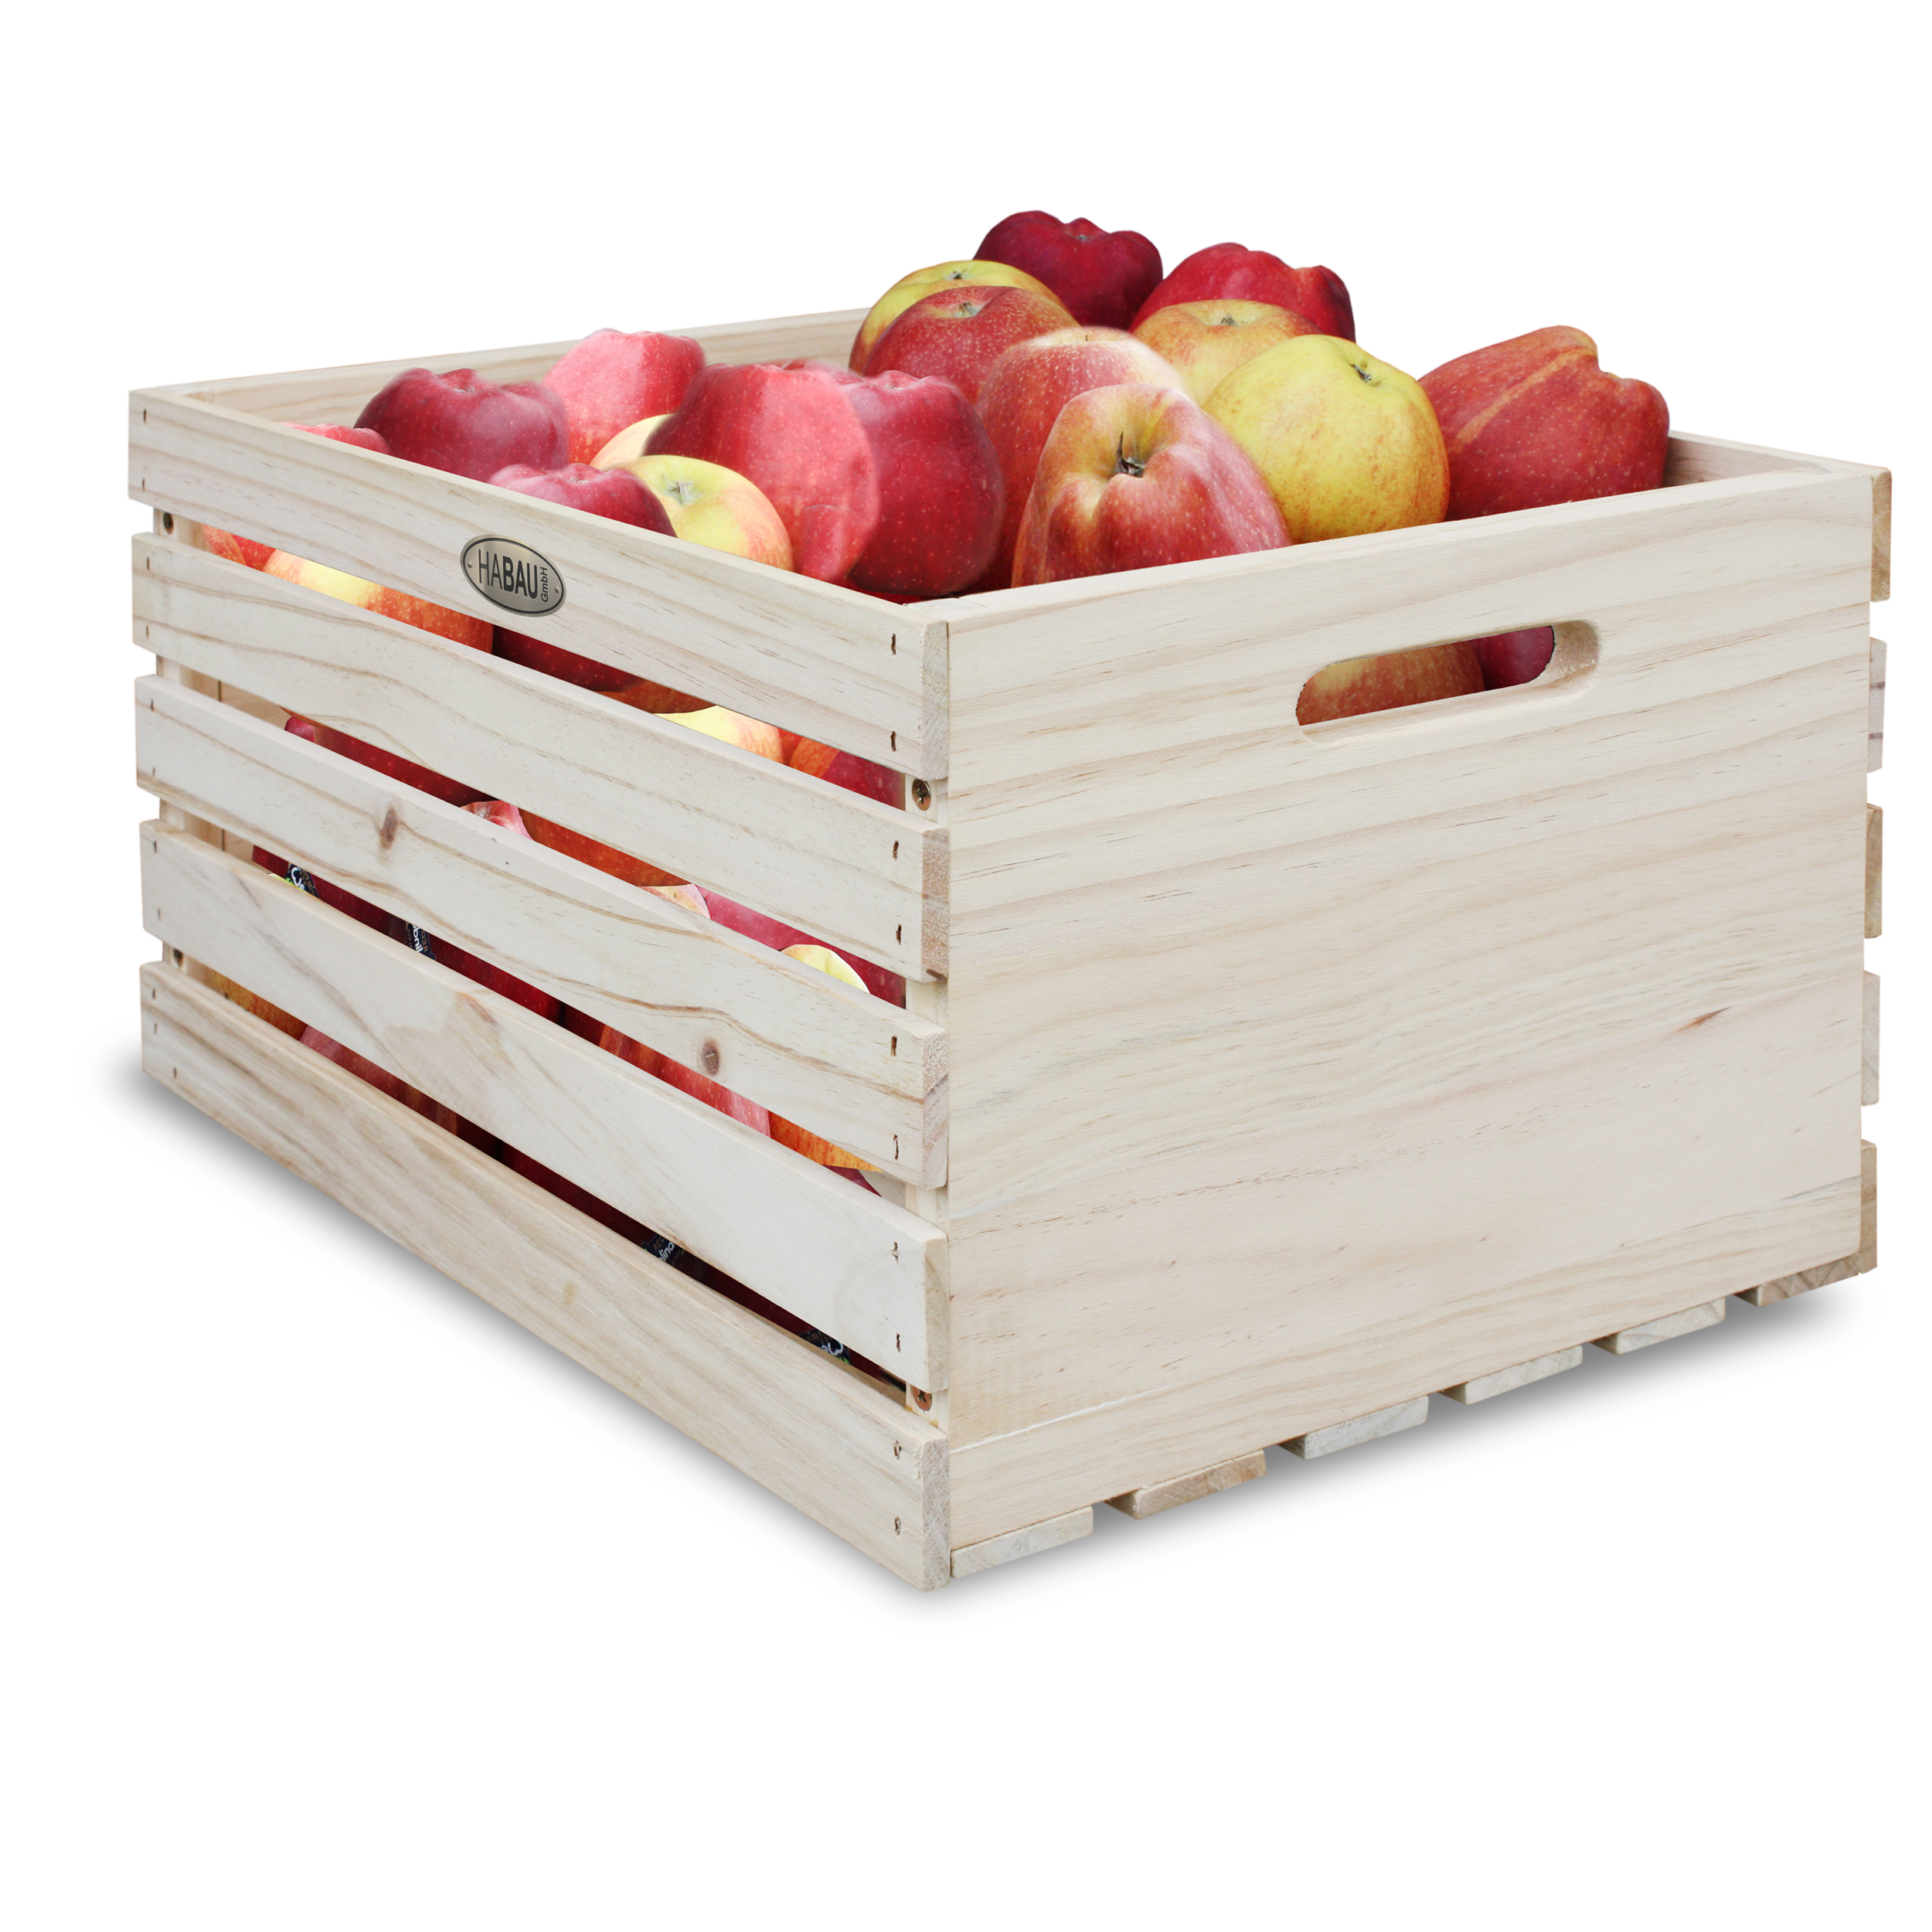 HABAU Holzkiste mit Äpfeln